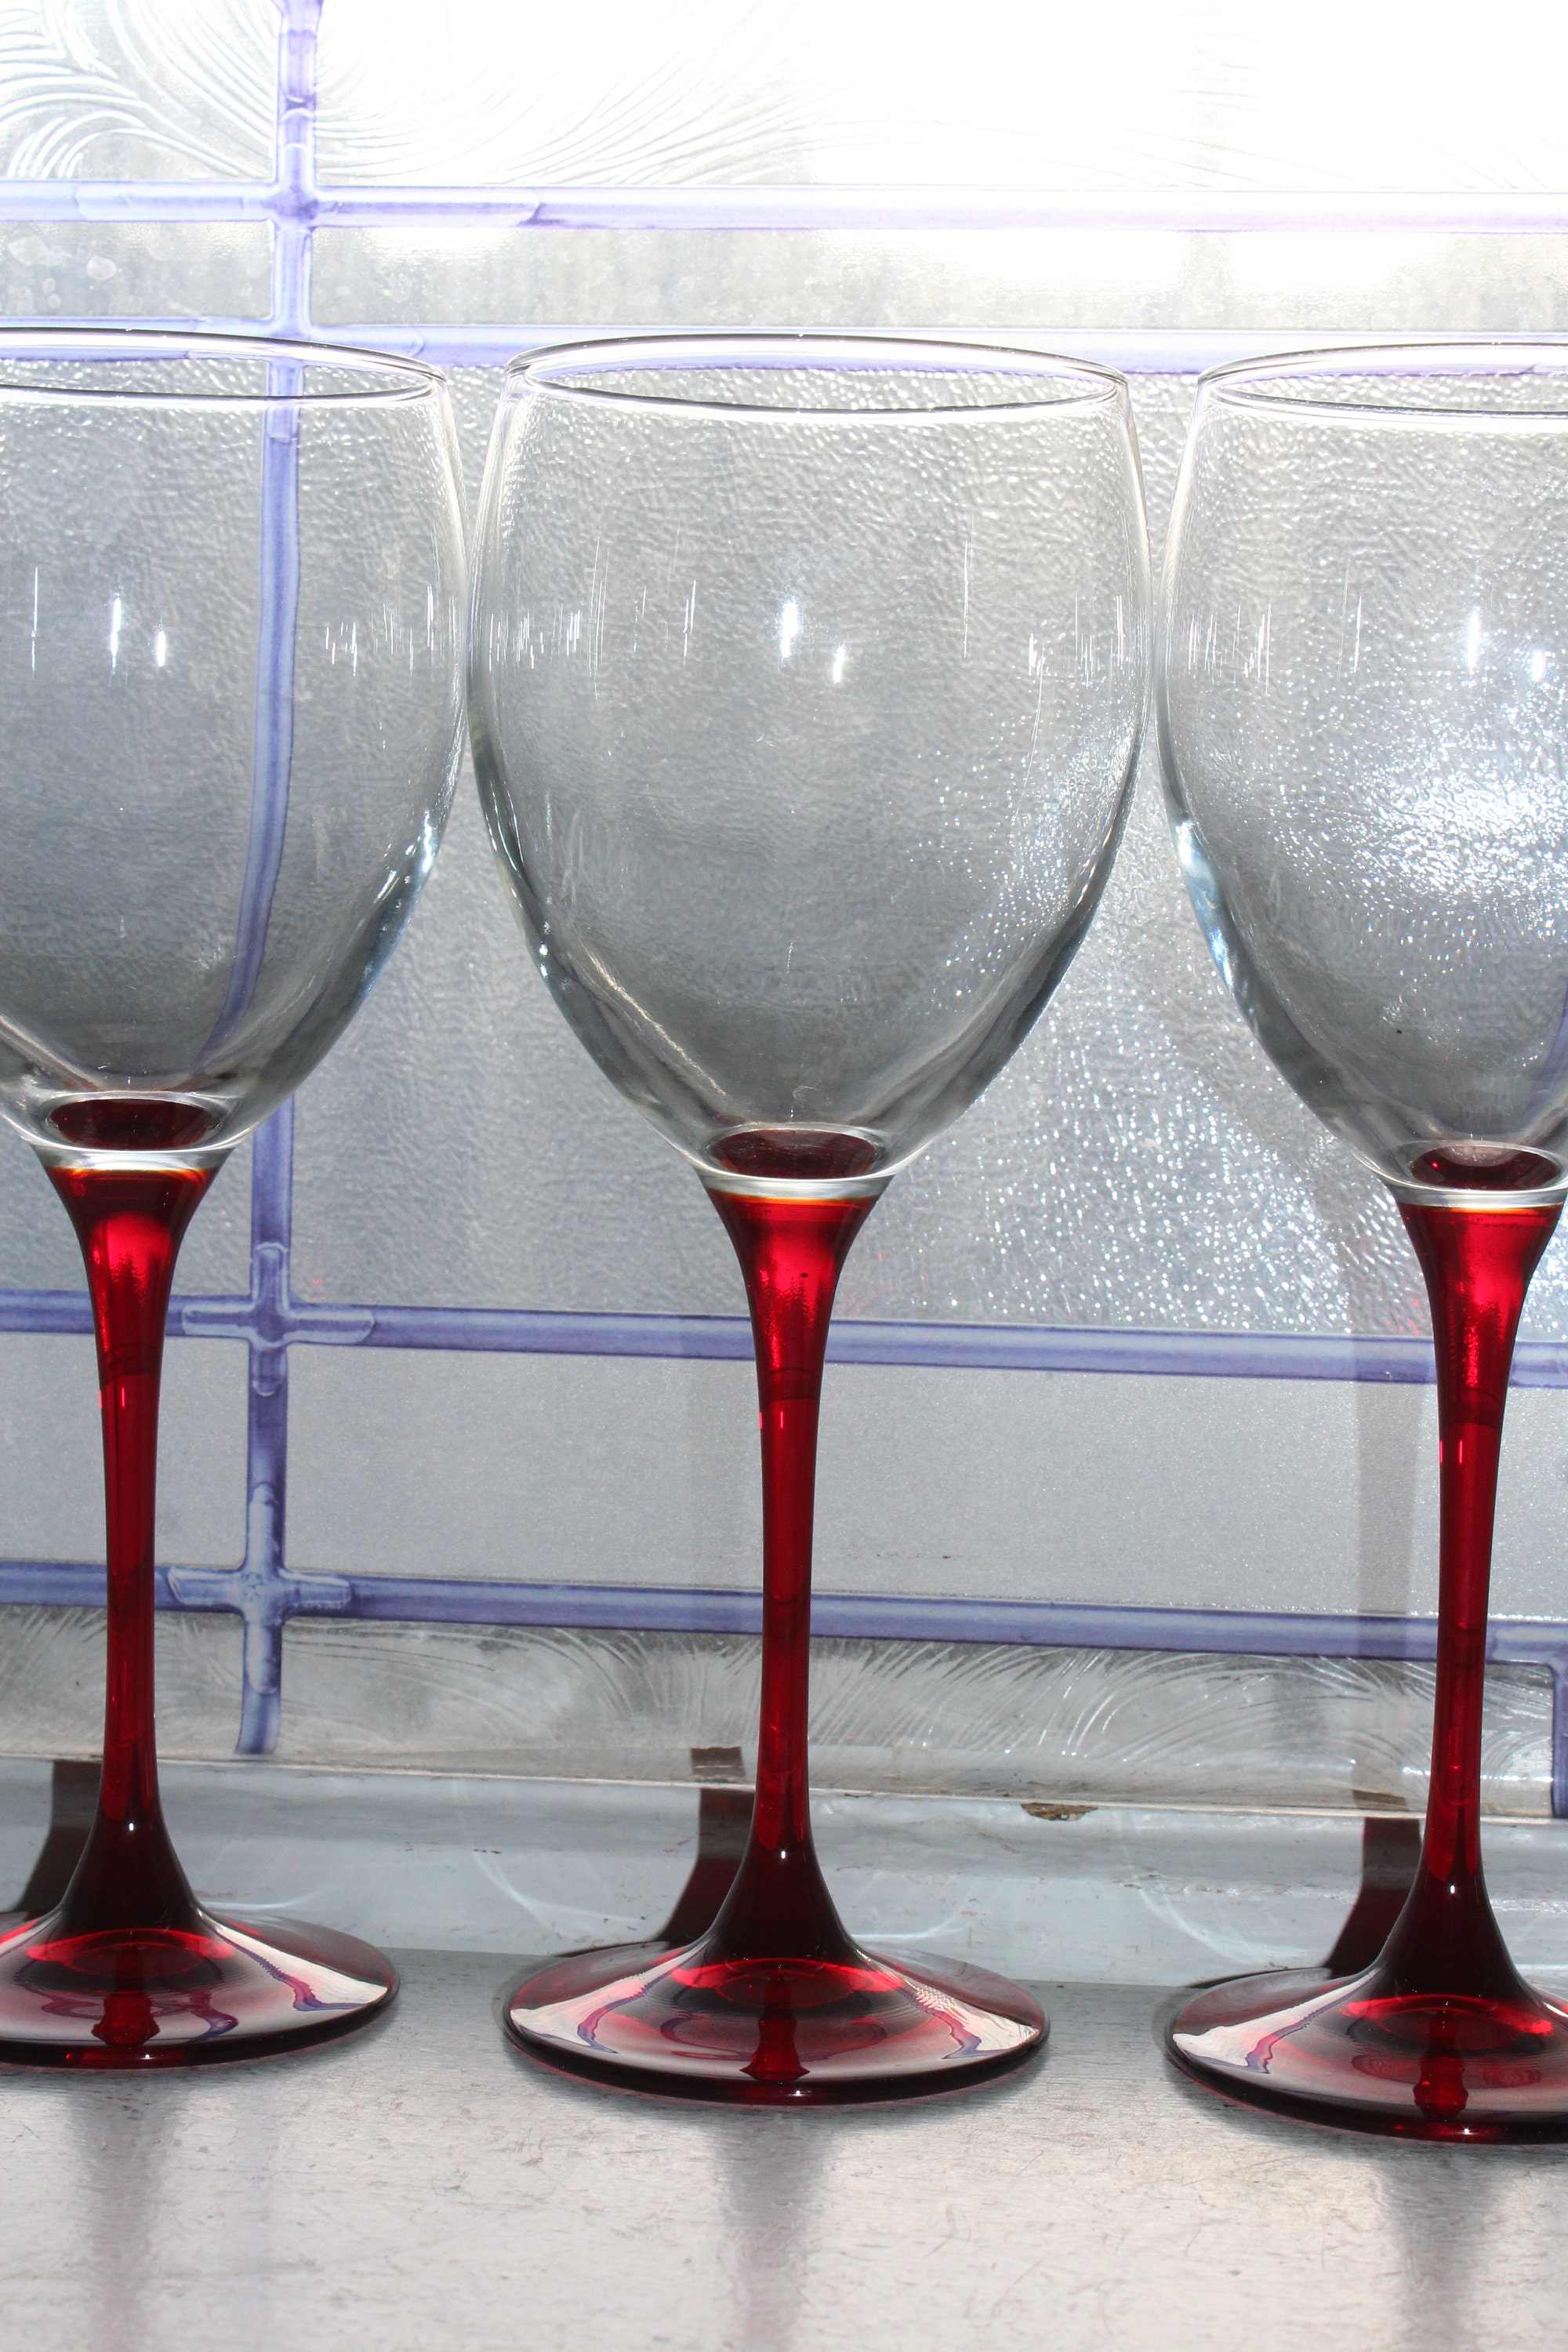 4 Cristal d'Arques Ruby Red Stem Wine Glasses